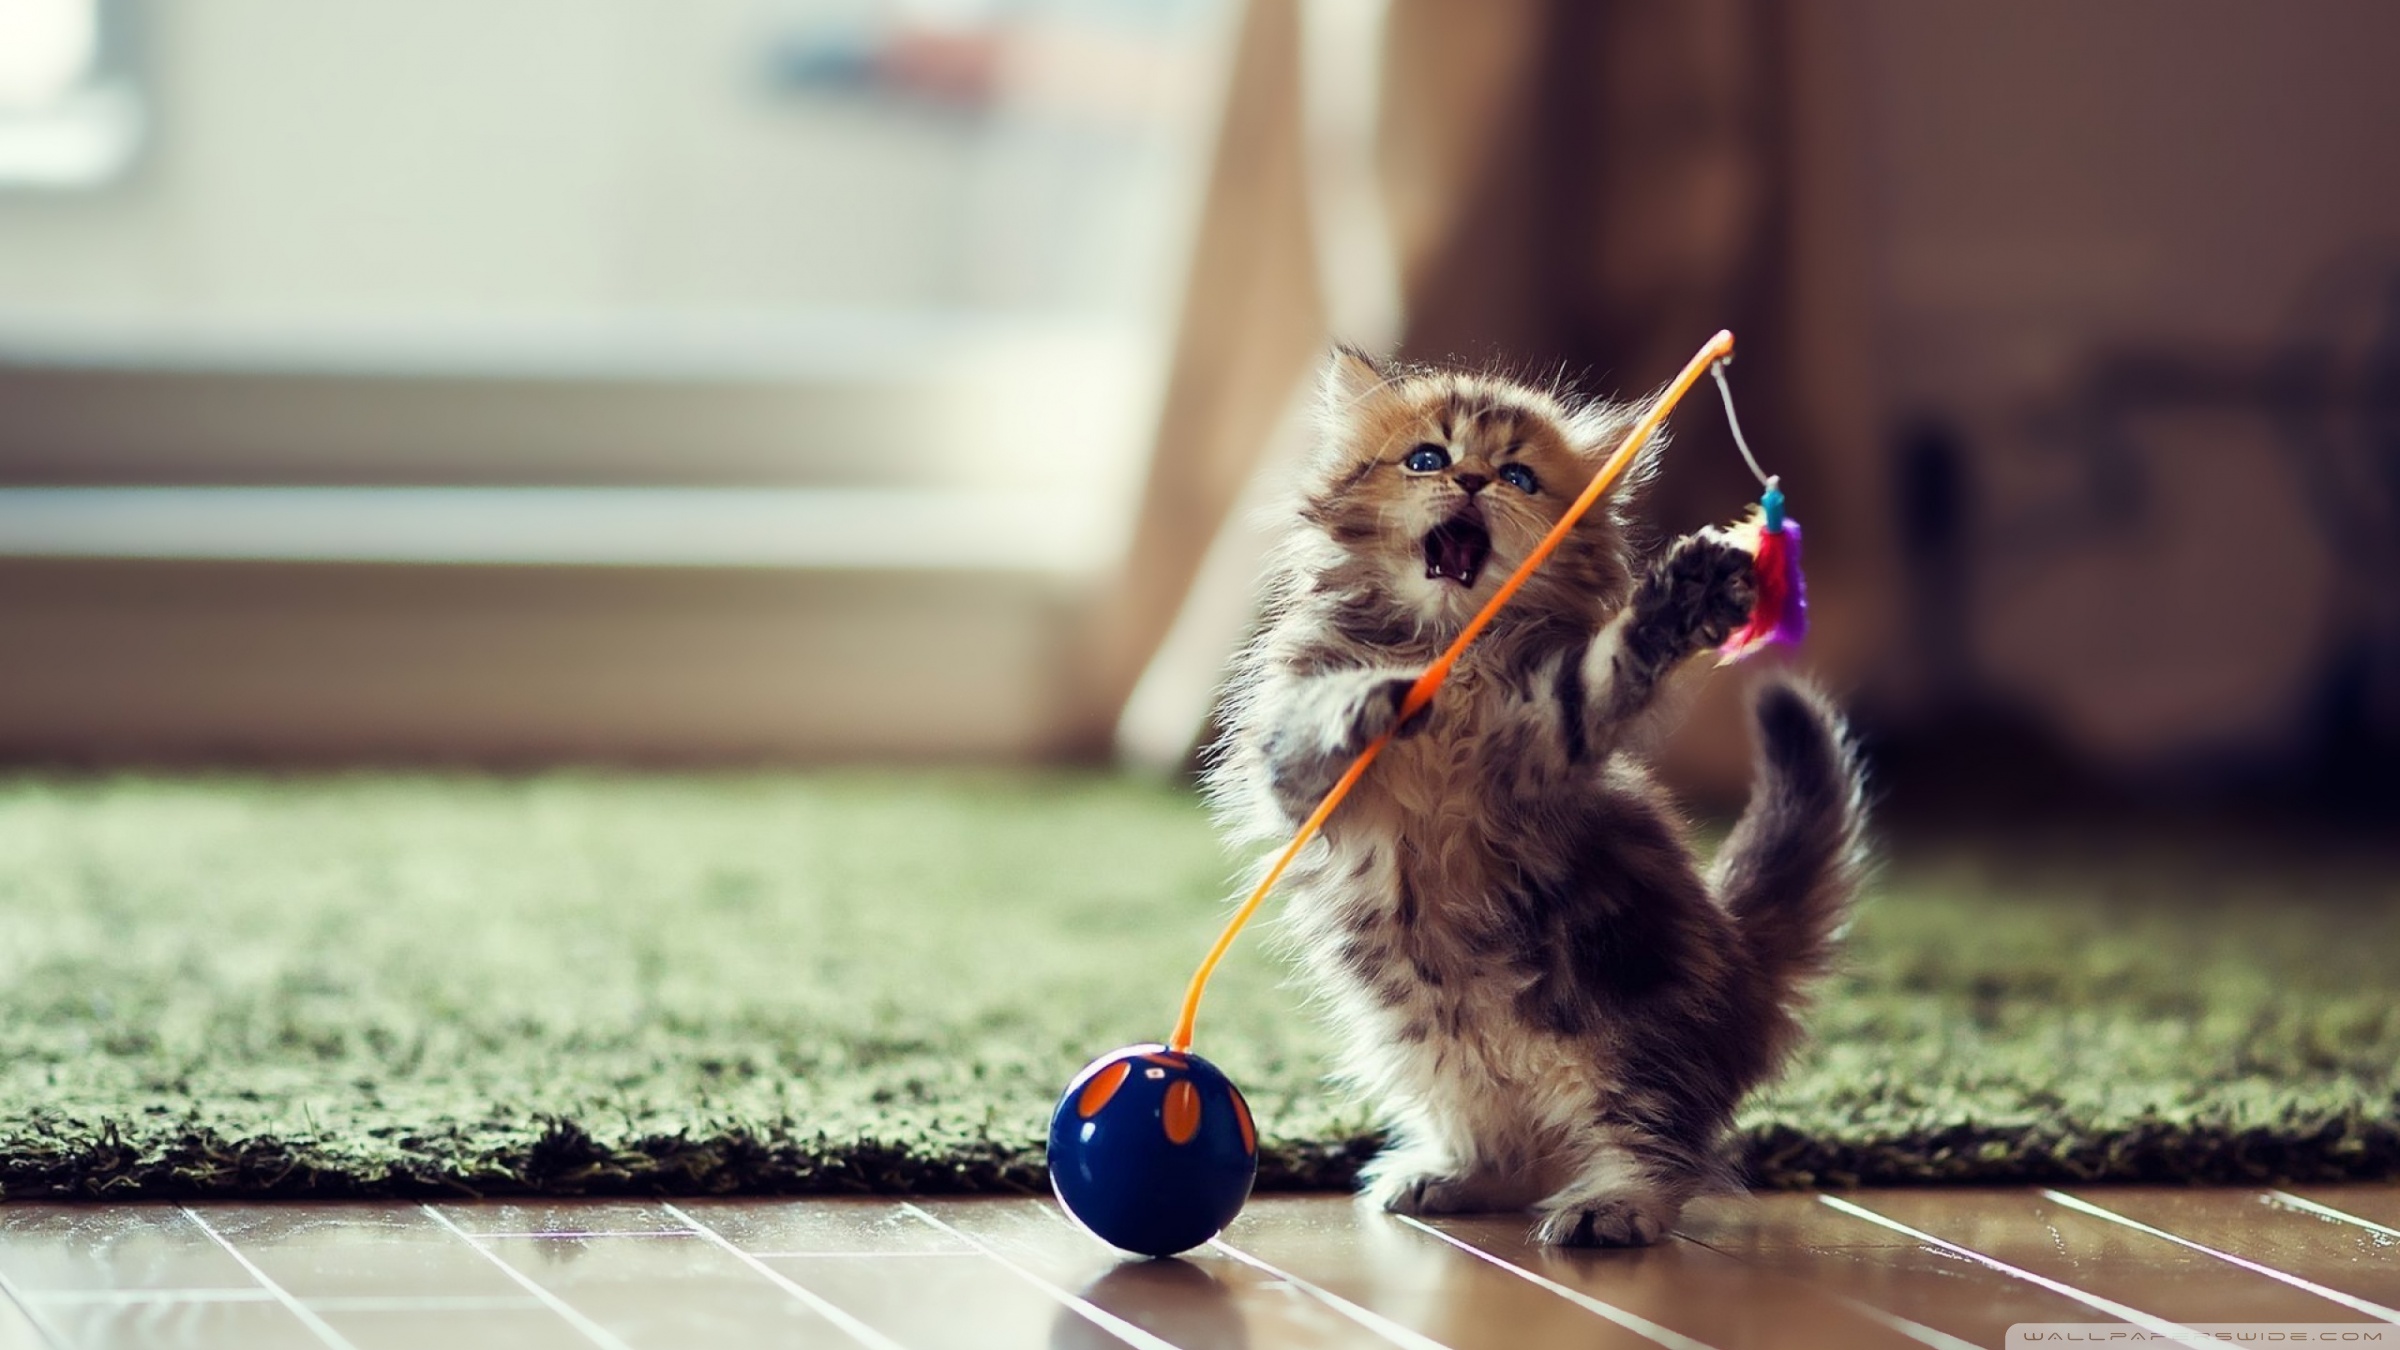 cute kitty playing - Album on Imgur